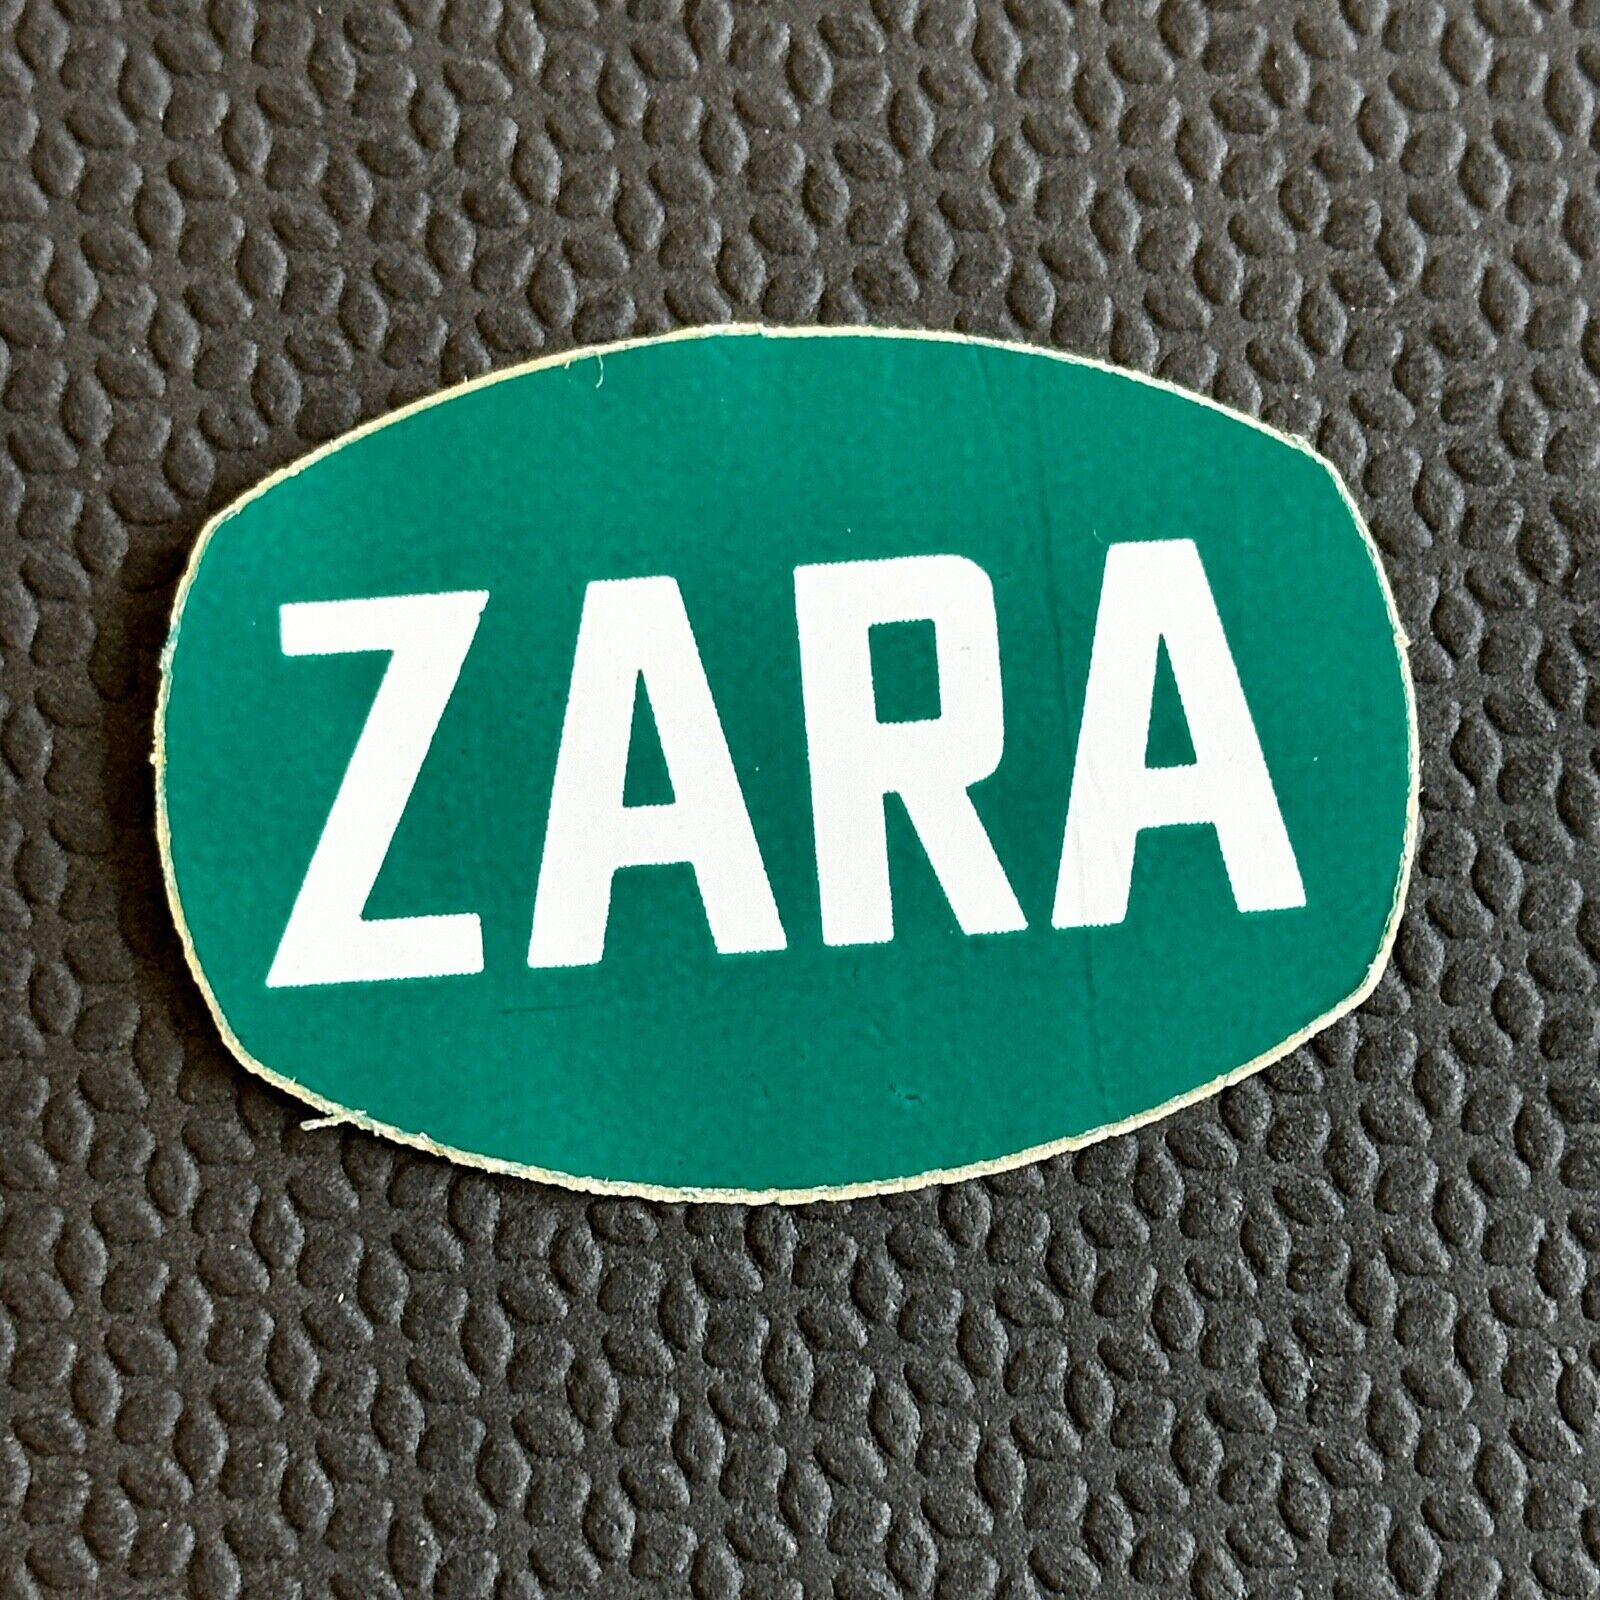 Vintage Sticker Zara Green White Letters Ovalish